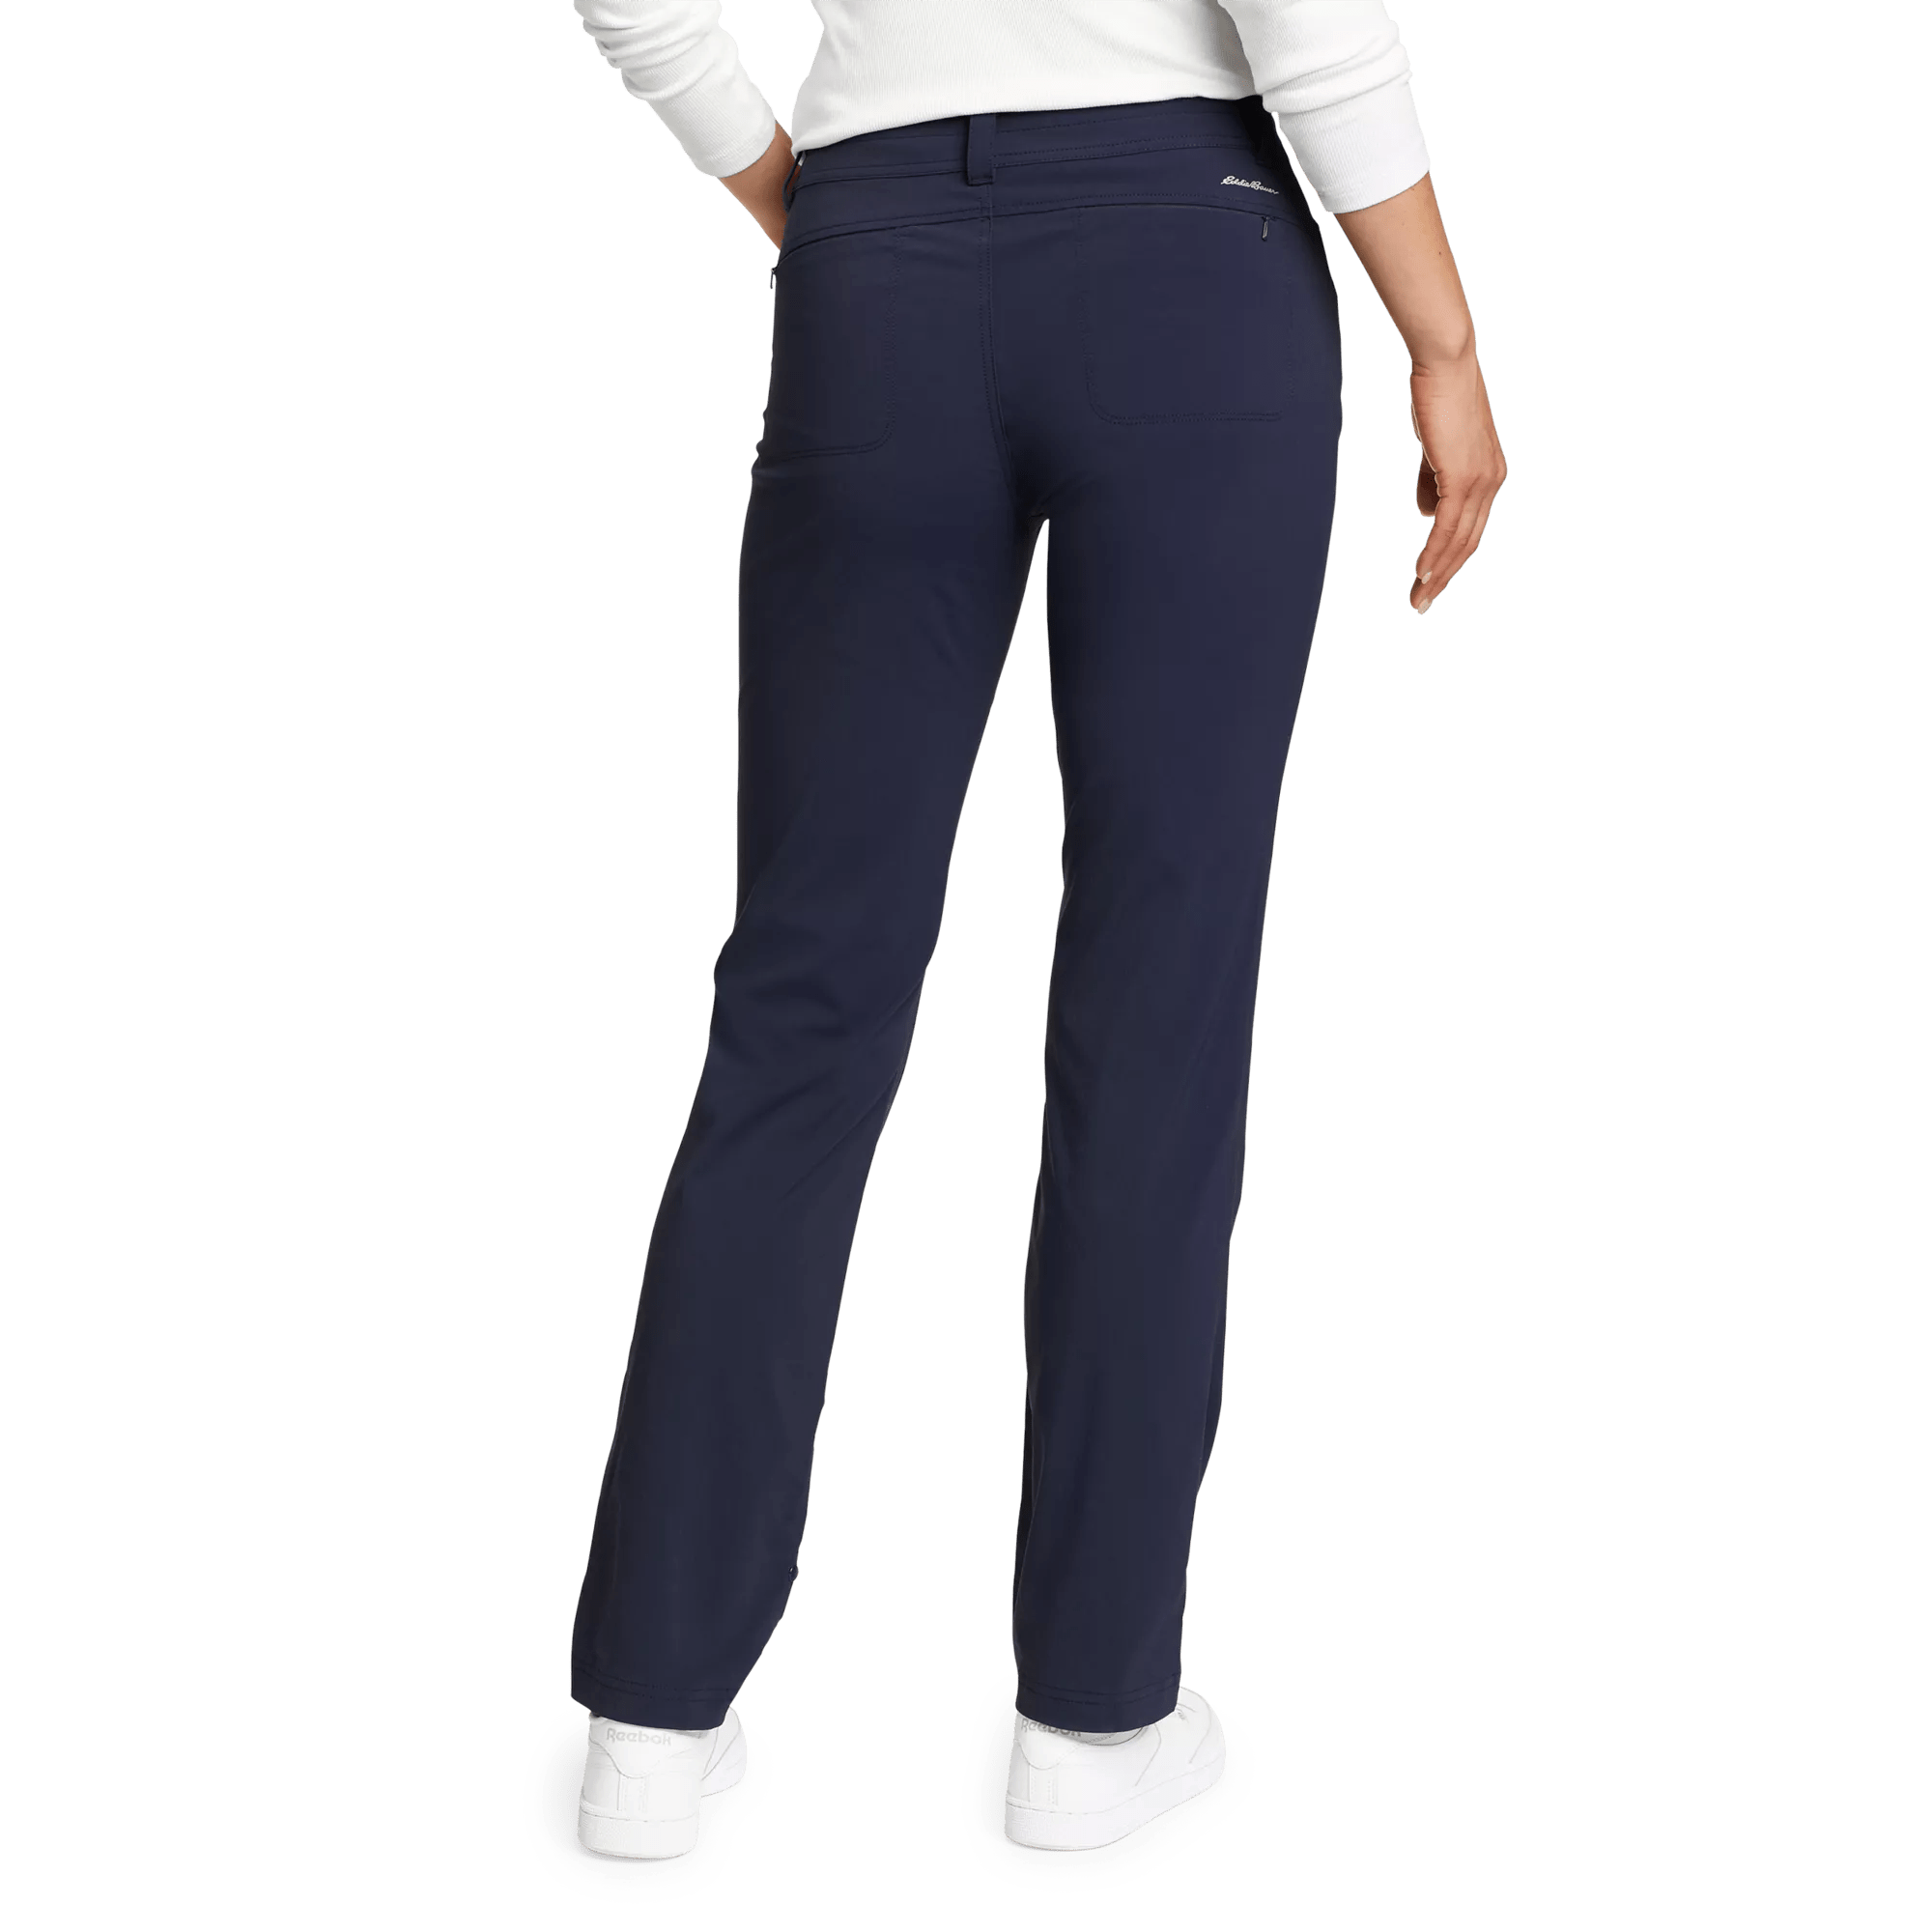 Sightscape Horizon Convertible Roll-Up Pants